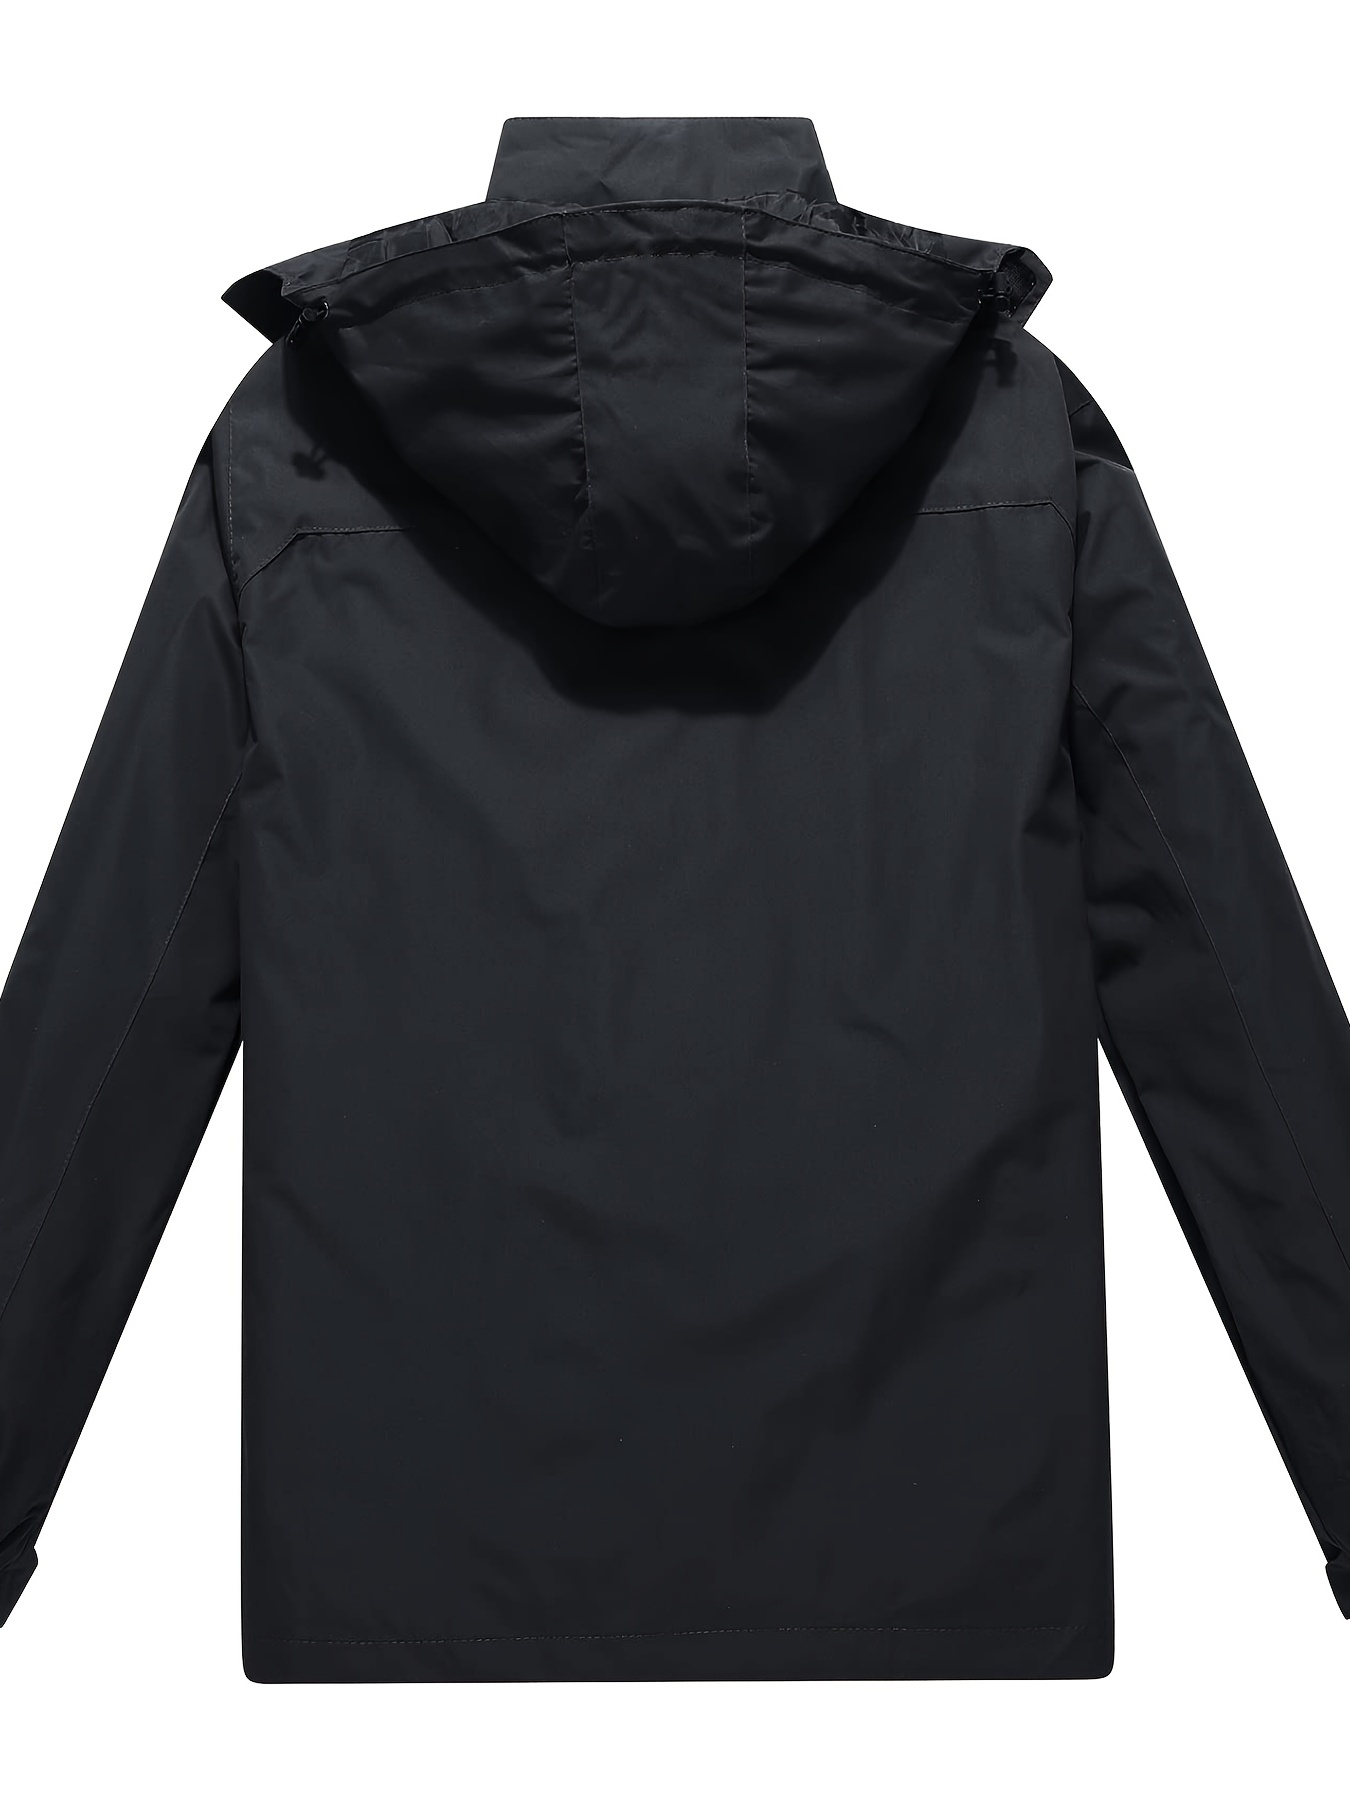 OTU Men's Lightweight Waterproof Hooded Rain Jacket Outdoor